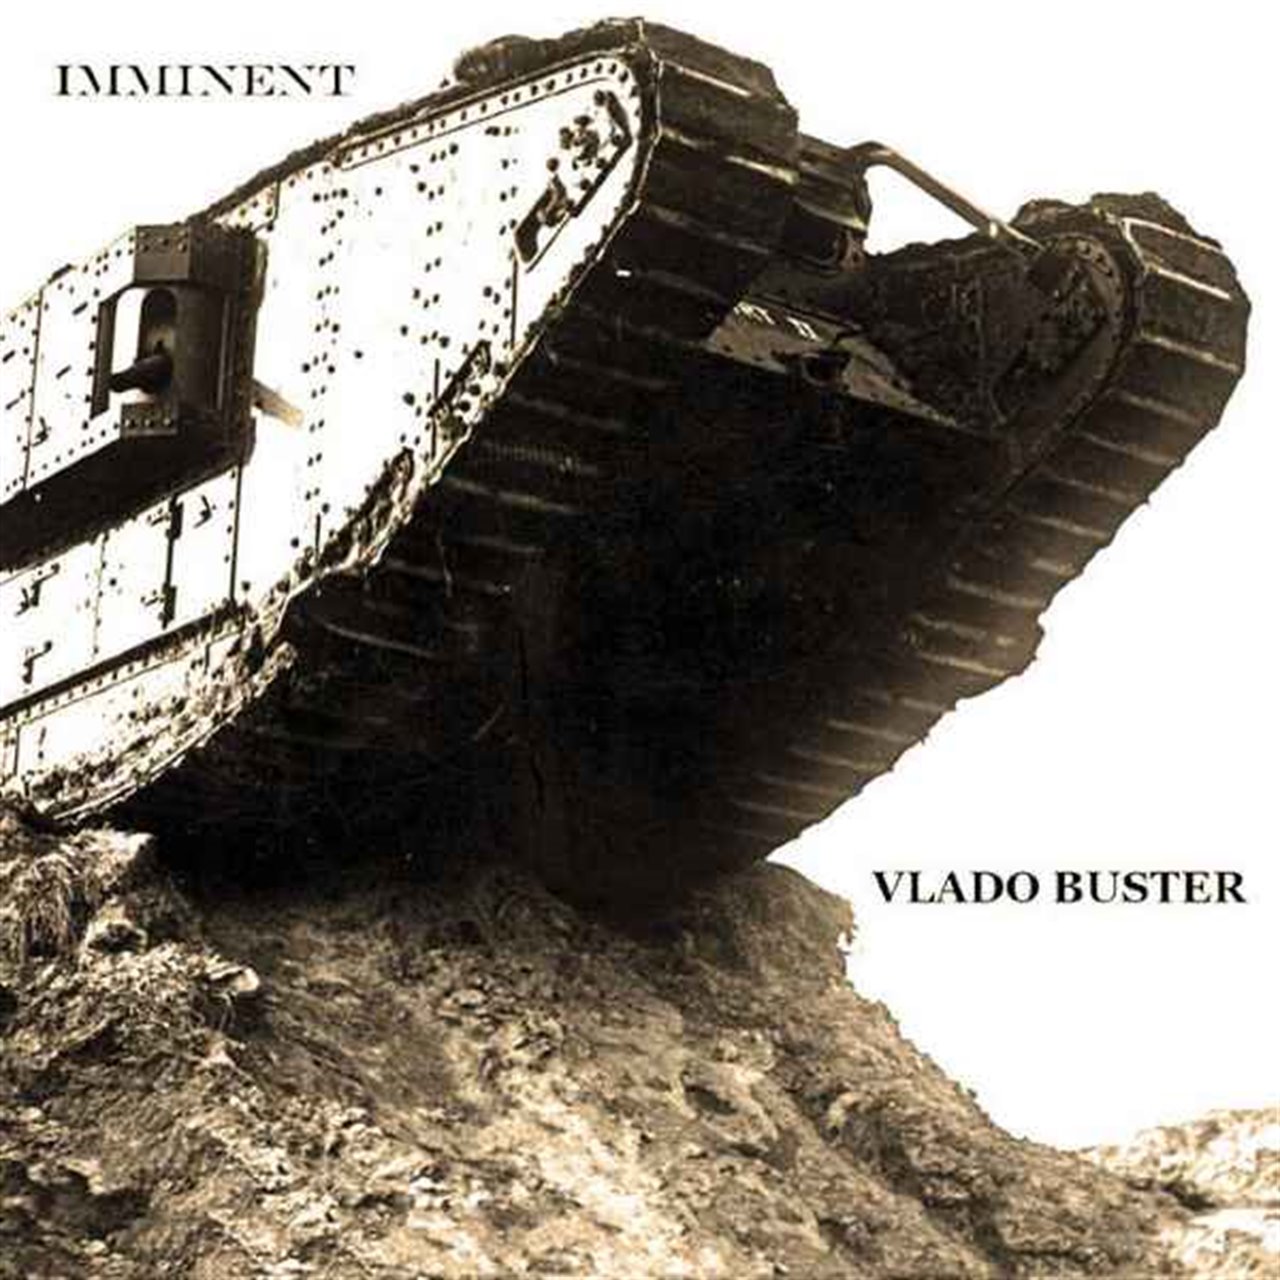 VLADO BUSTER - Imminent